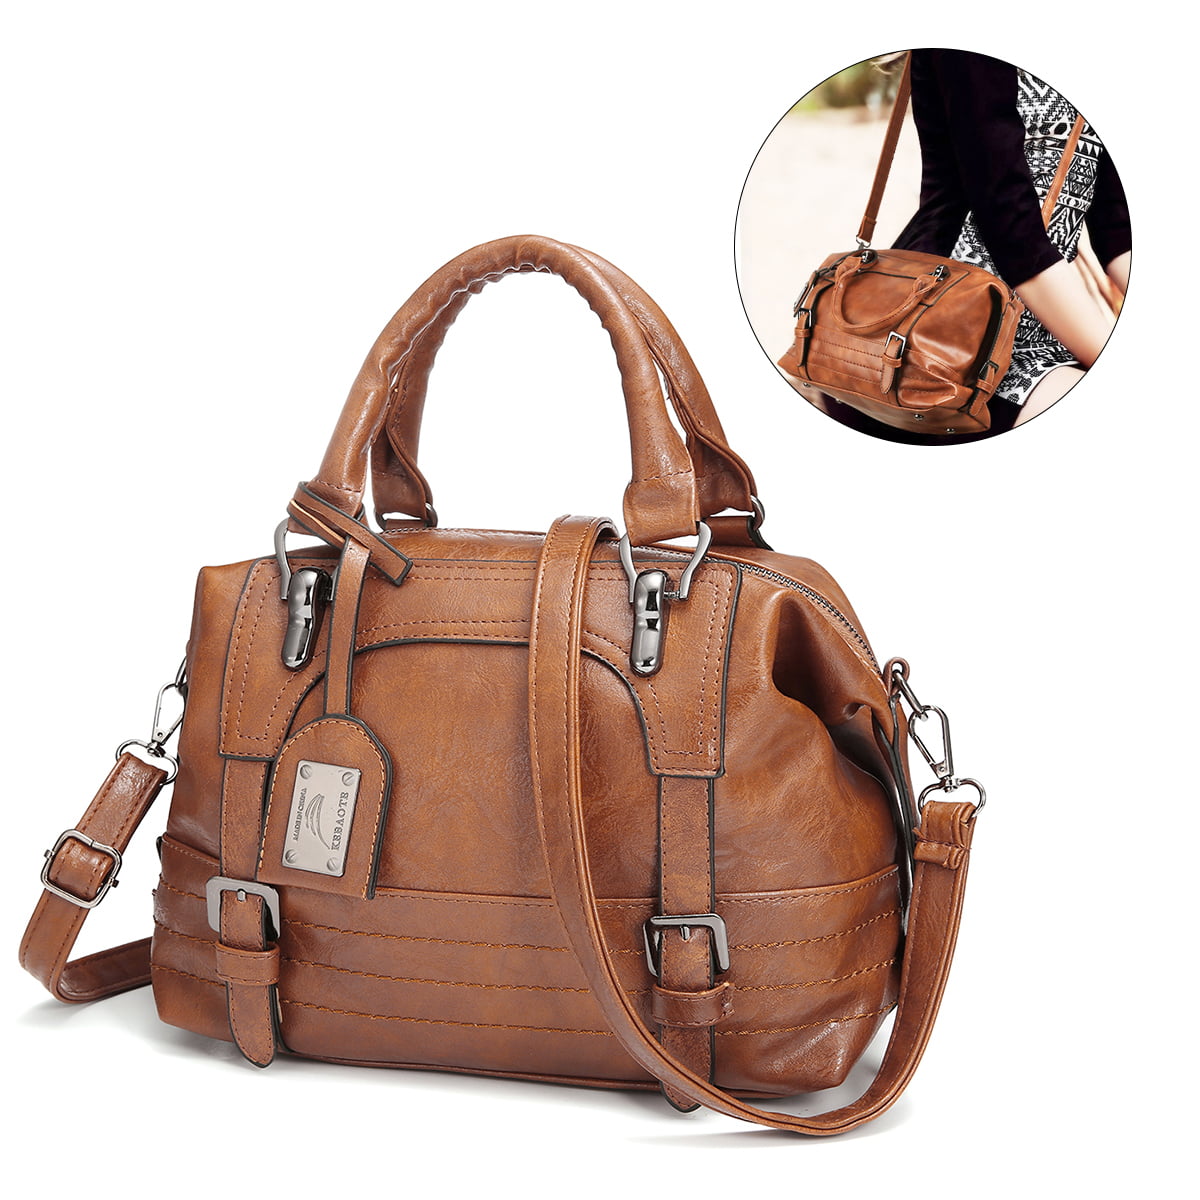 ForU-1 Handbag Shoulder Bag for Women PU Leather Solid Handbags Crossbody Messenger Bags Tote Bags 